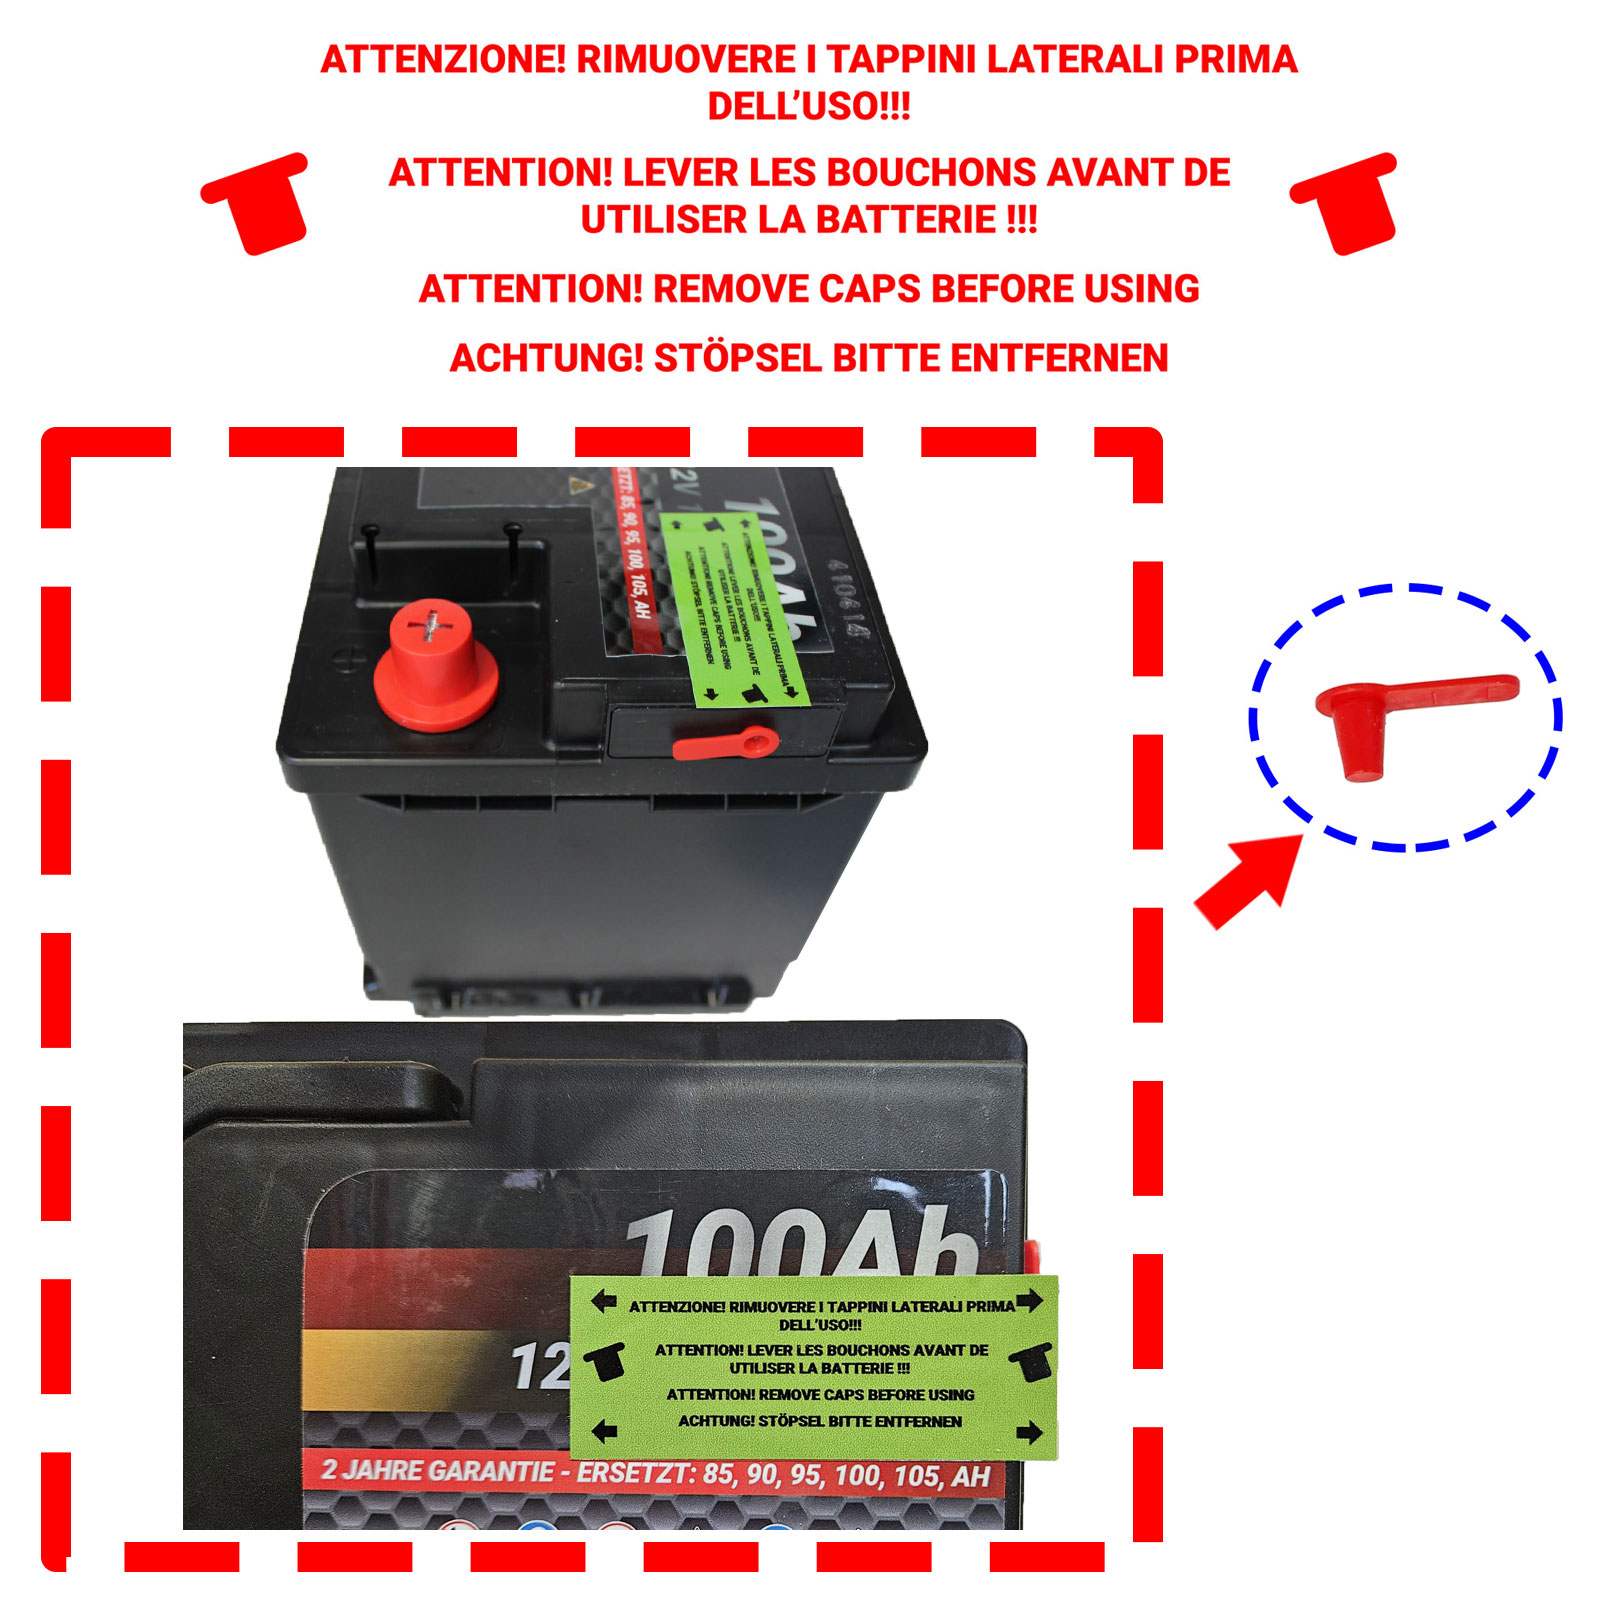 Batteria Auto Speed 100Ah AGM 850A con polo positivo a destra per motori  Start&Stop : : Auto e Moto